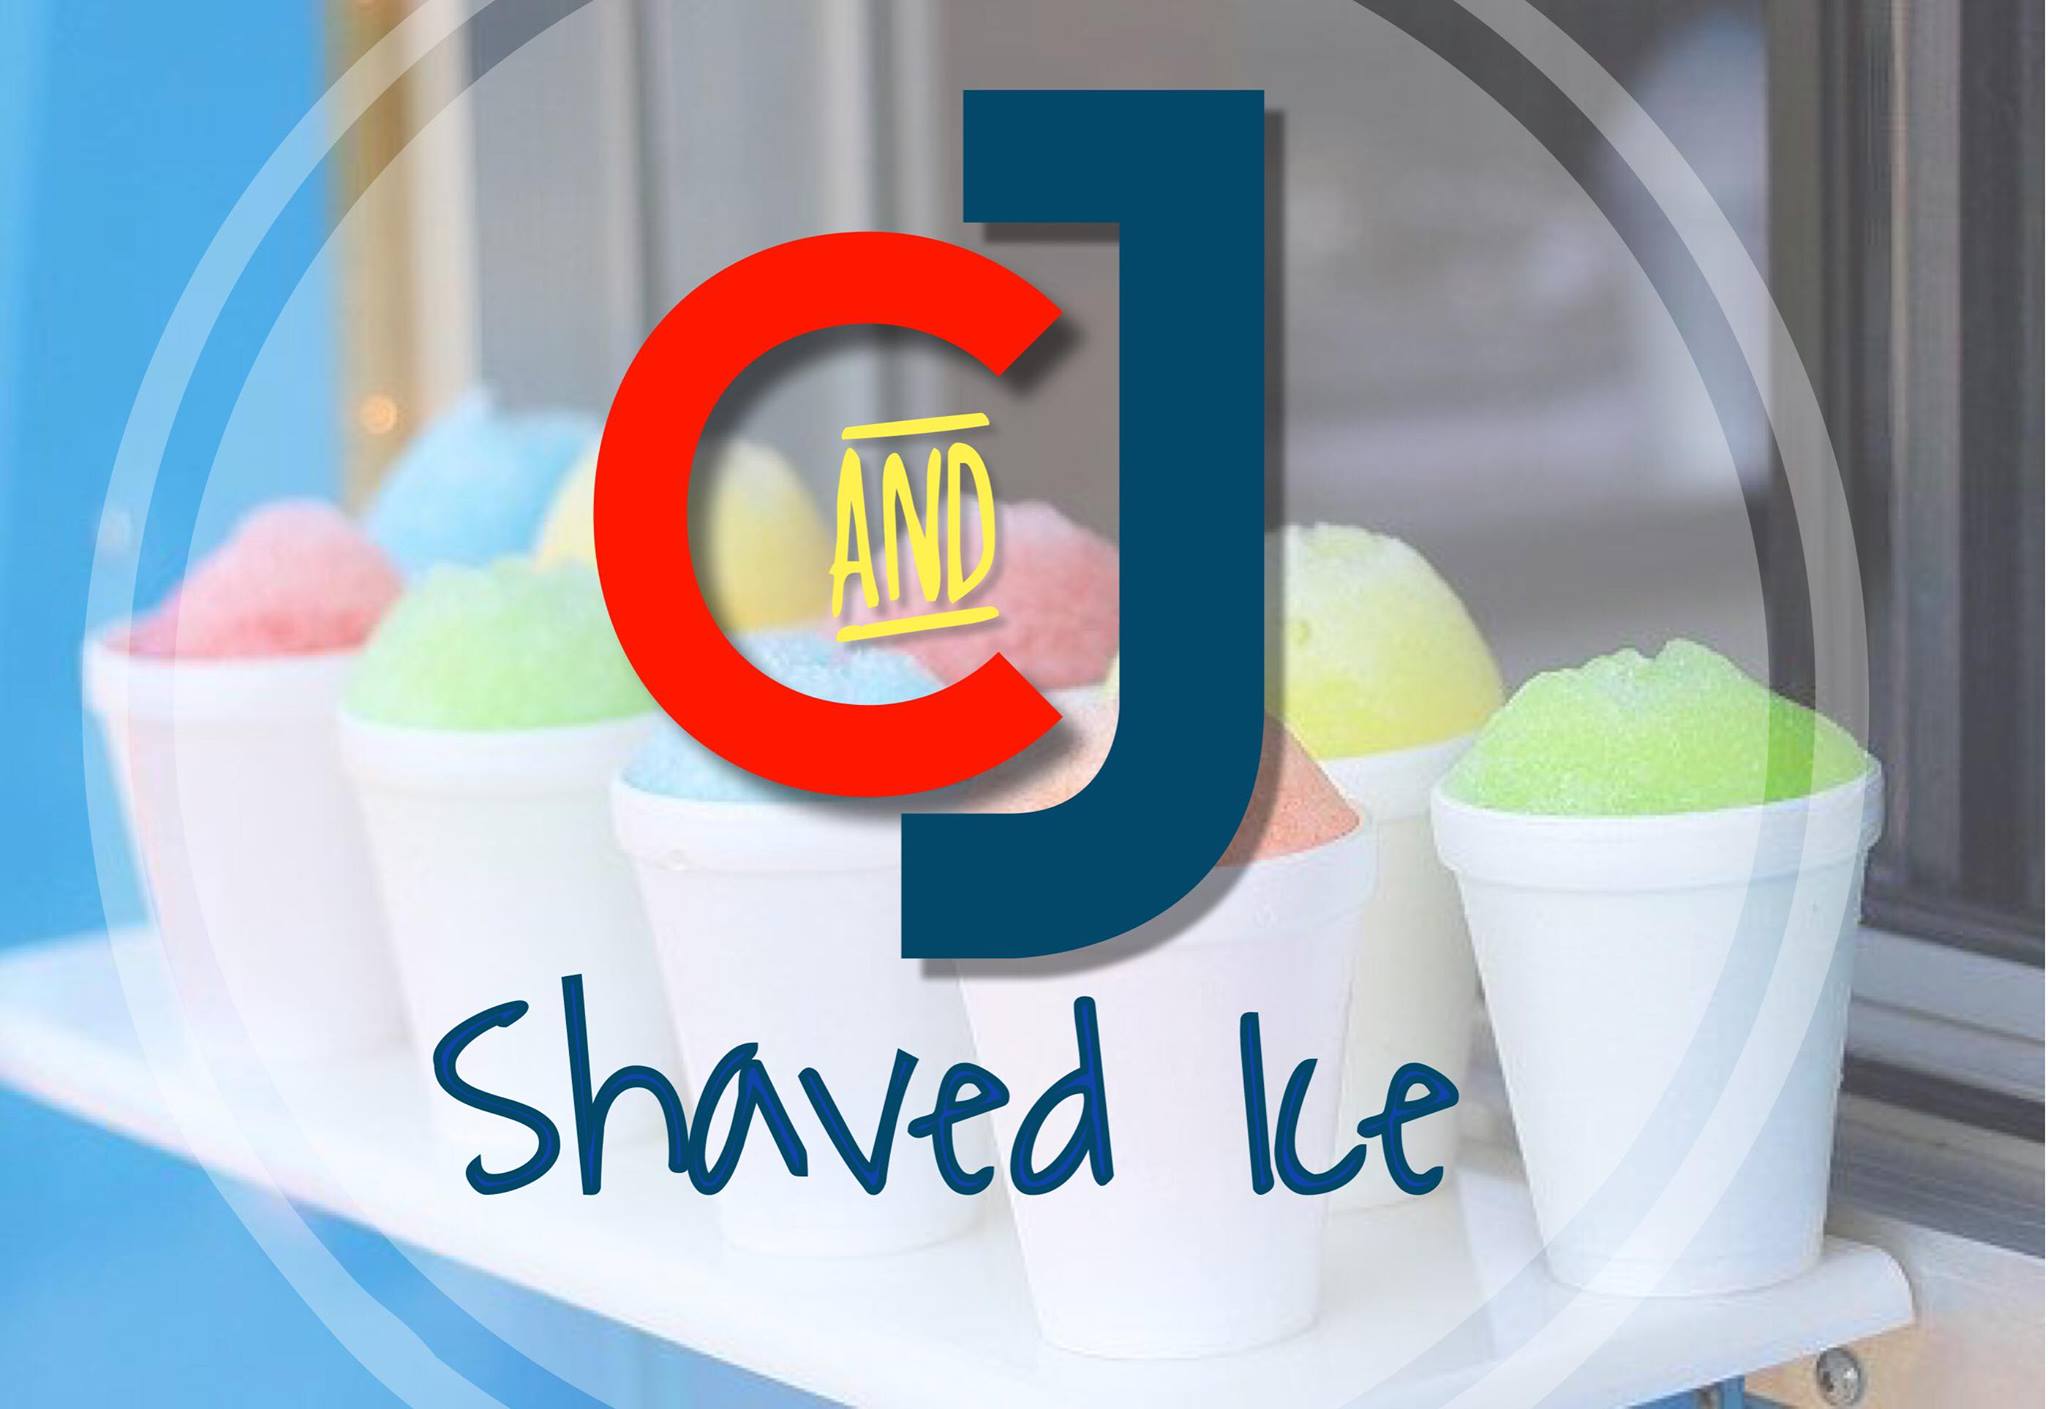 C&J Shaved Ice